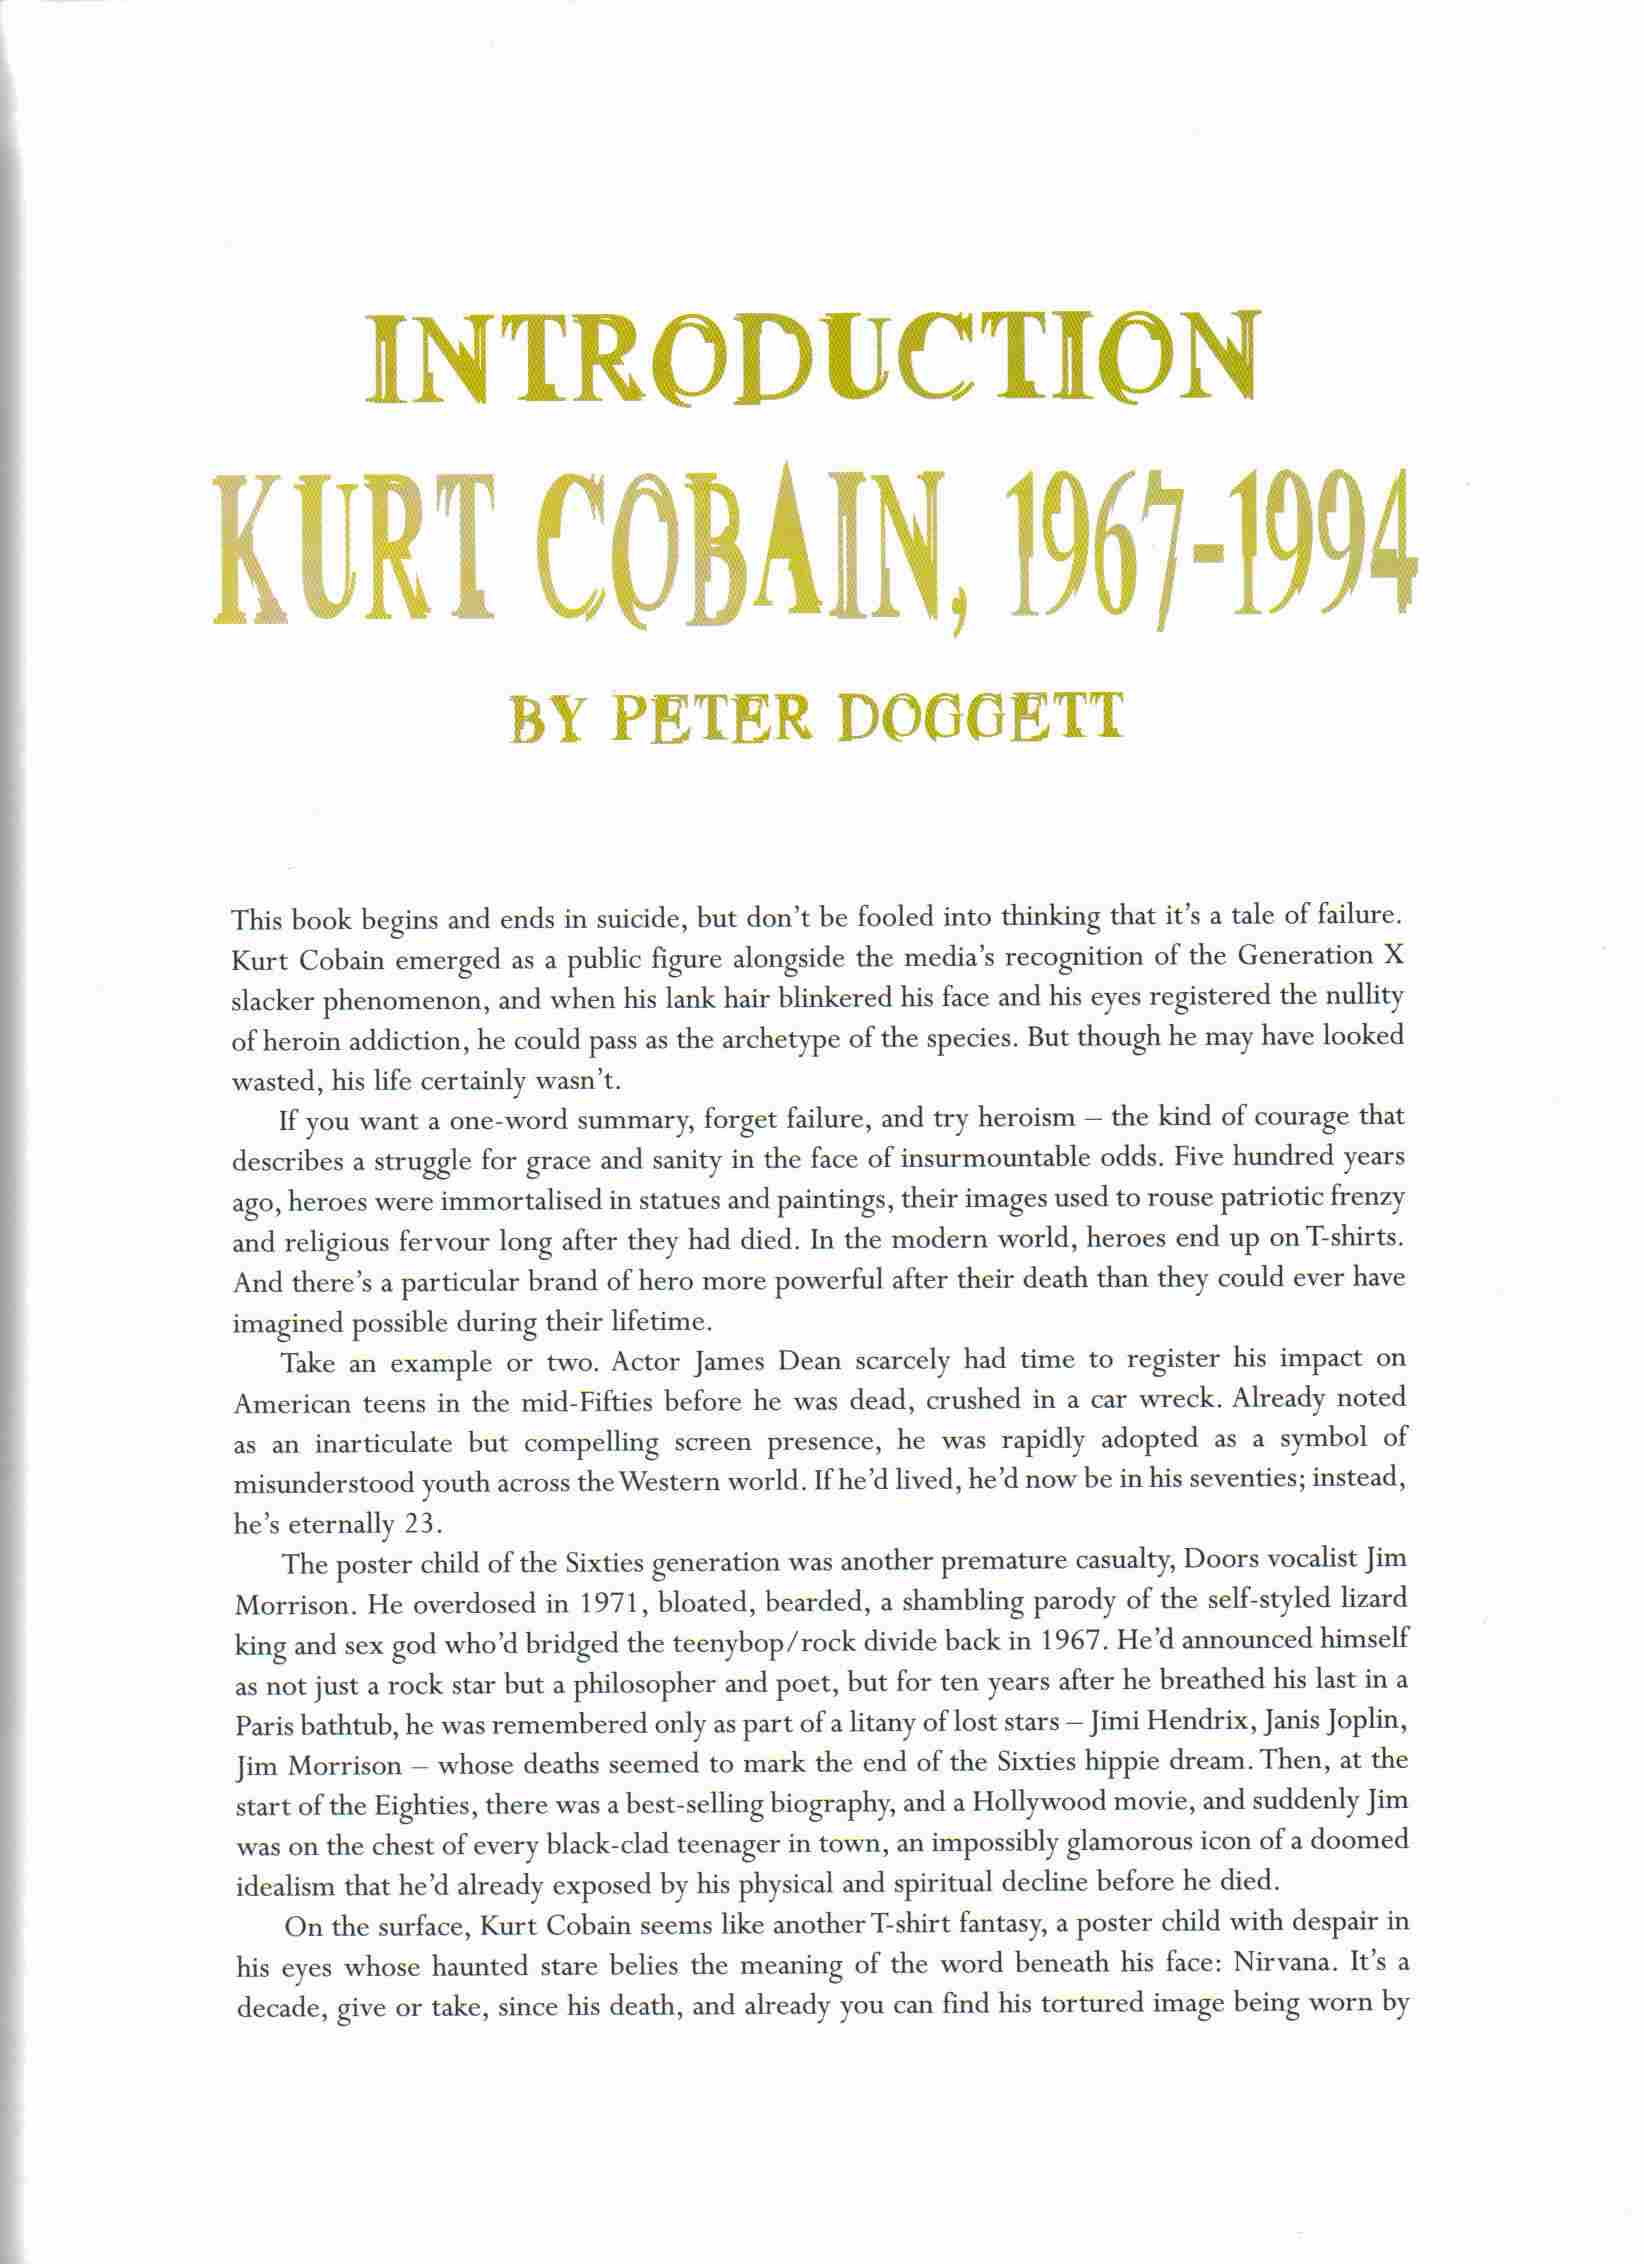 Read online GodSpeed: The Kurt Cobain Graphic comic -  Issue # TPB - 4